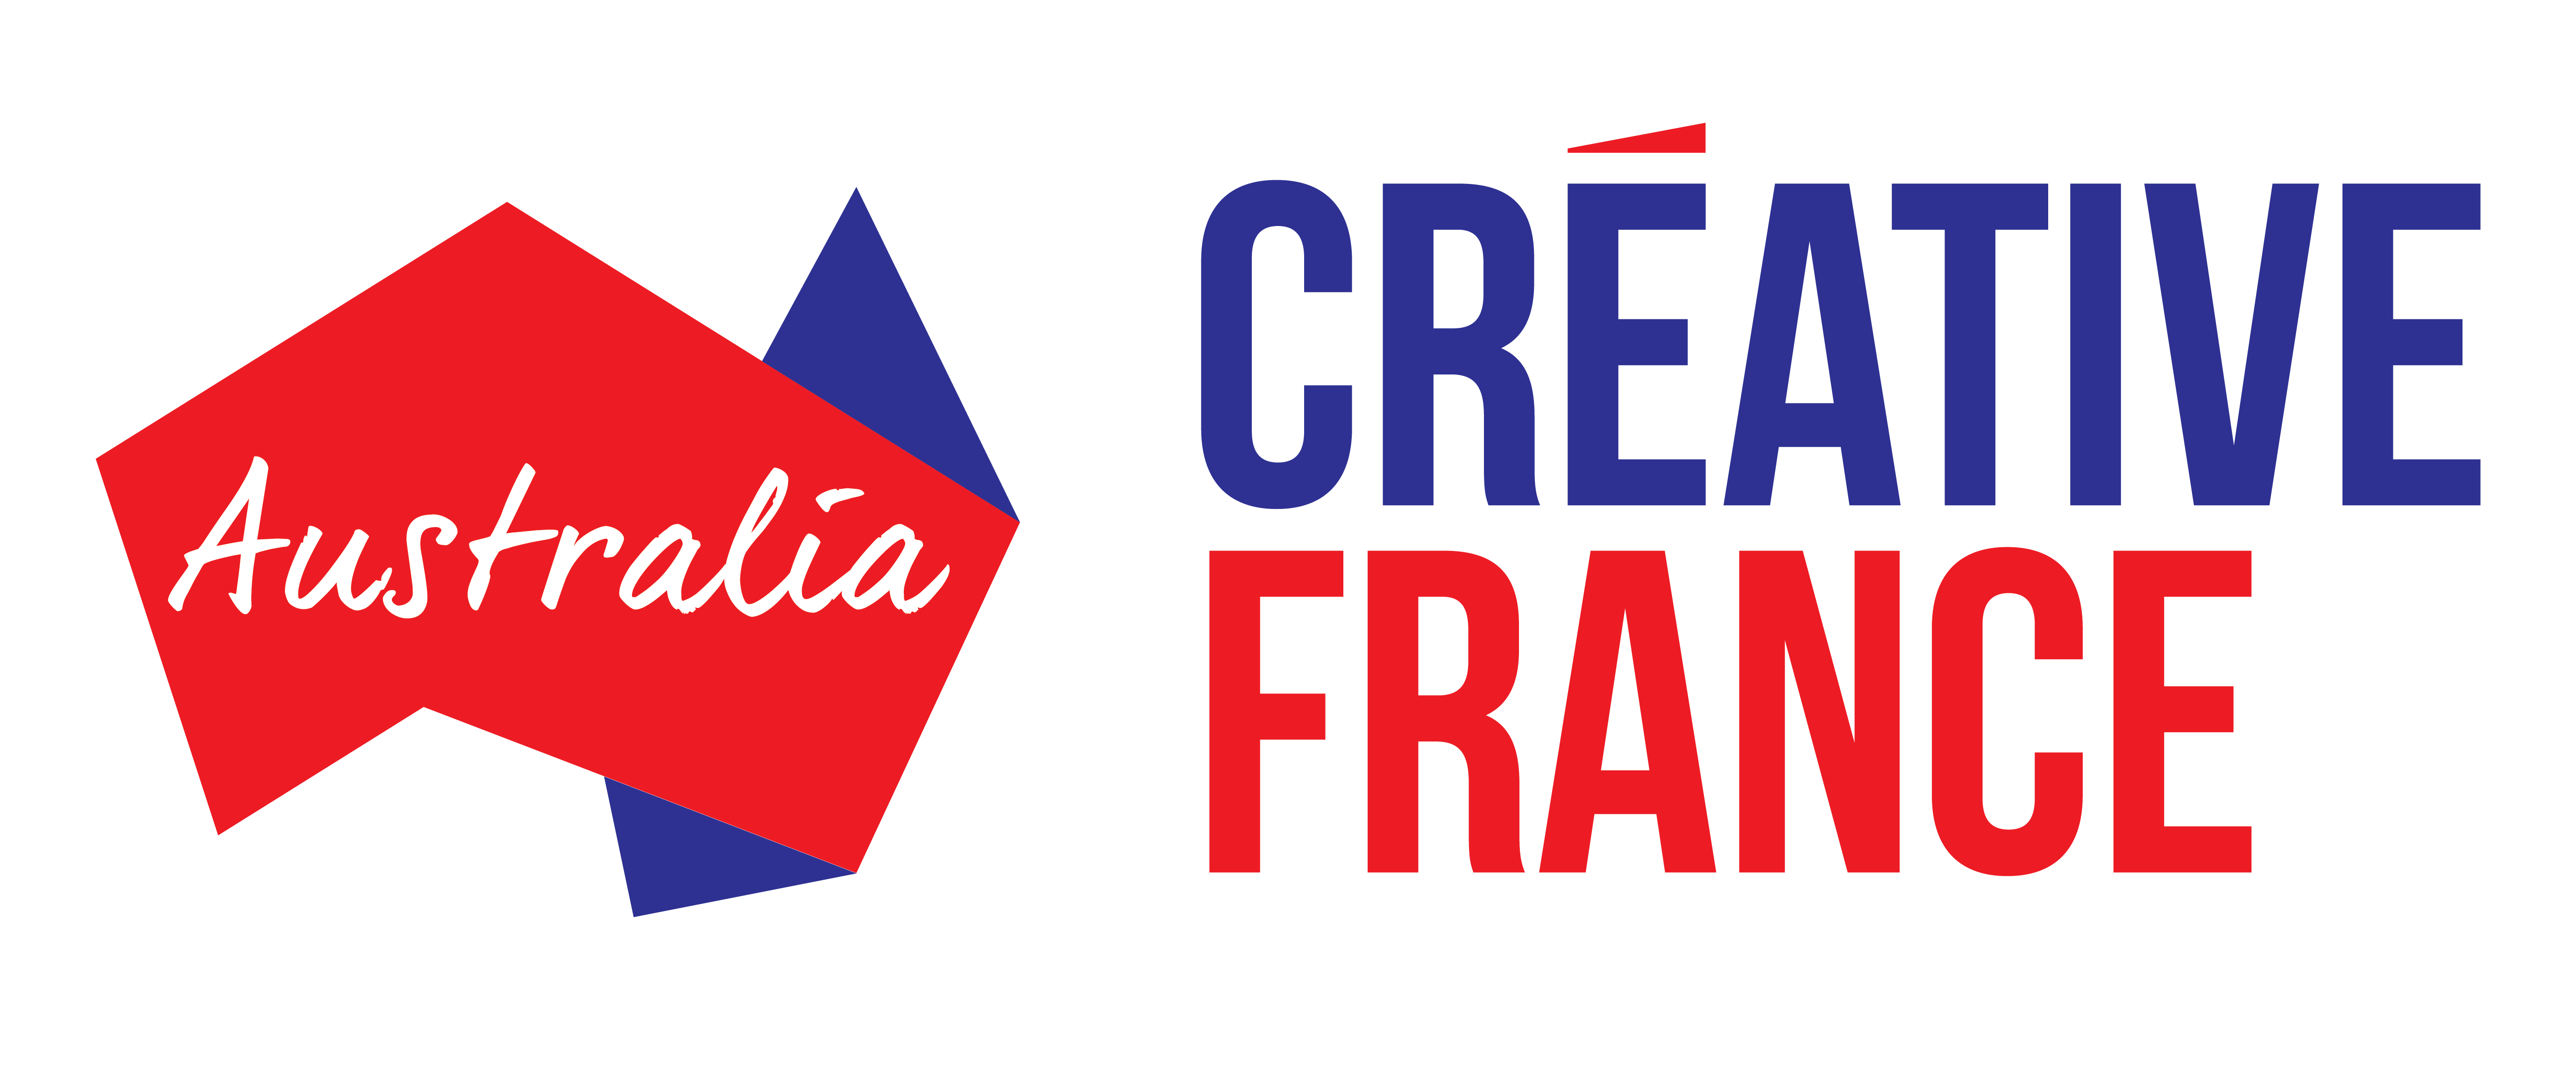 Creative France